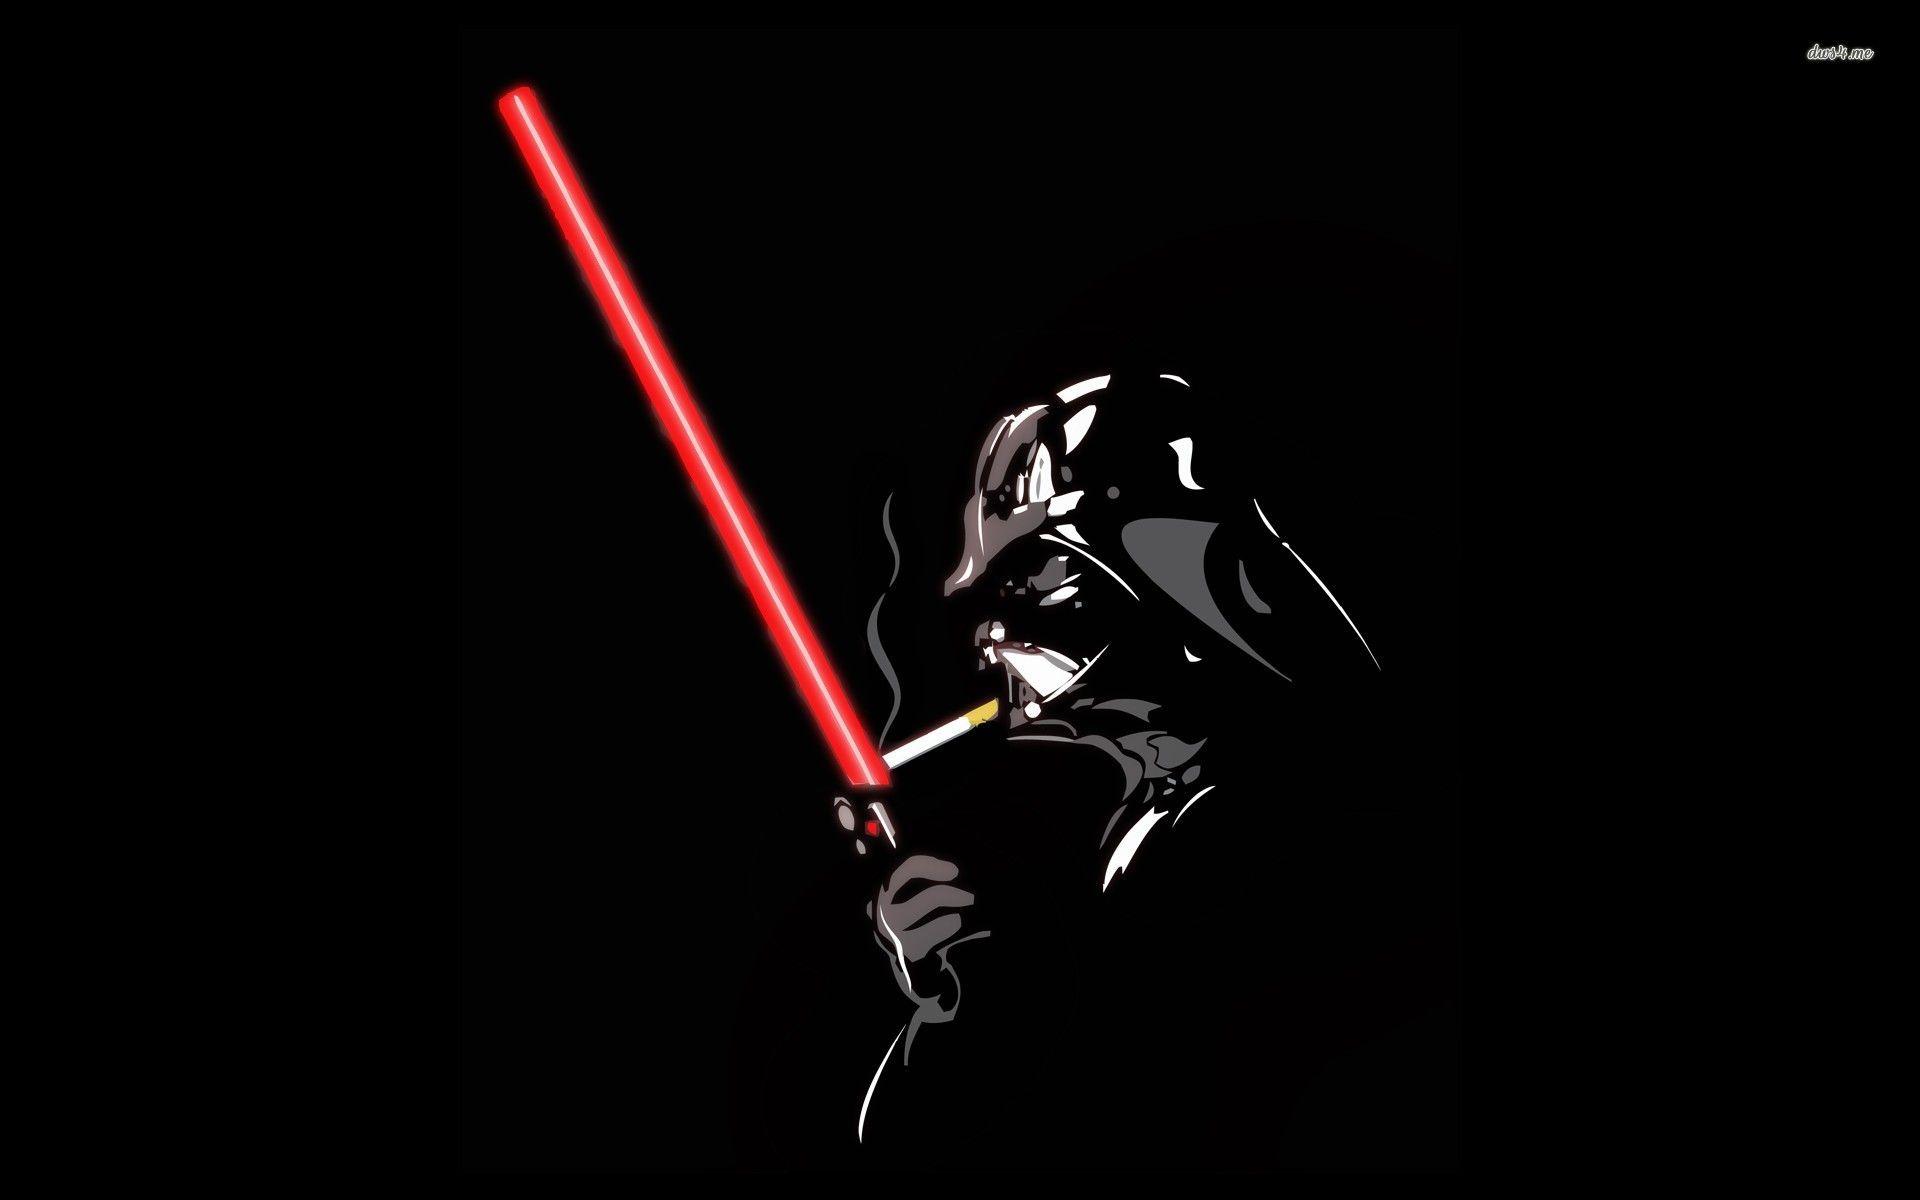 Darth Vader and his lightsaber HD wallpaper. Darth vader wallpaper, Star wars wallpaper, Darth vader